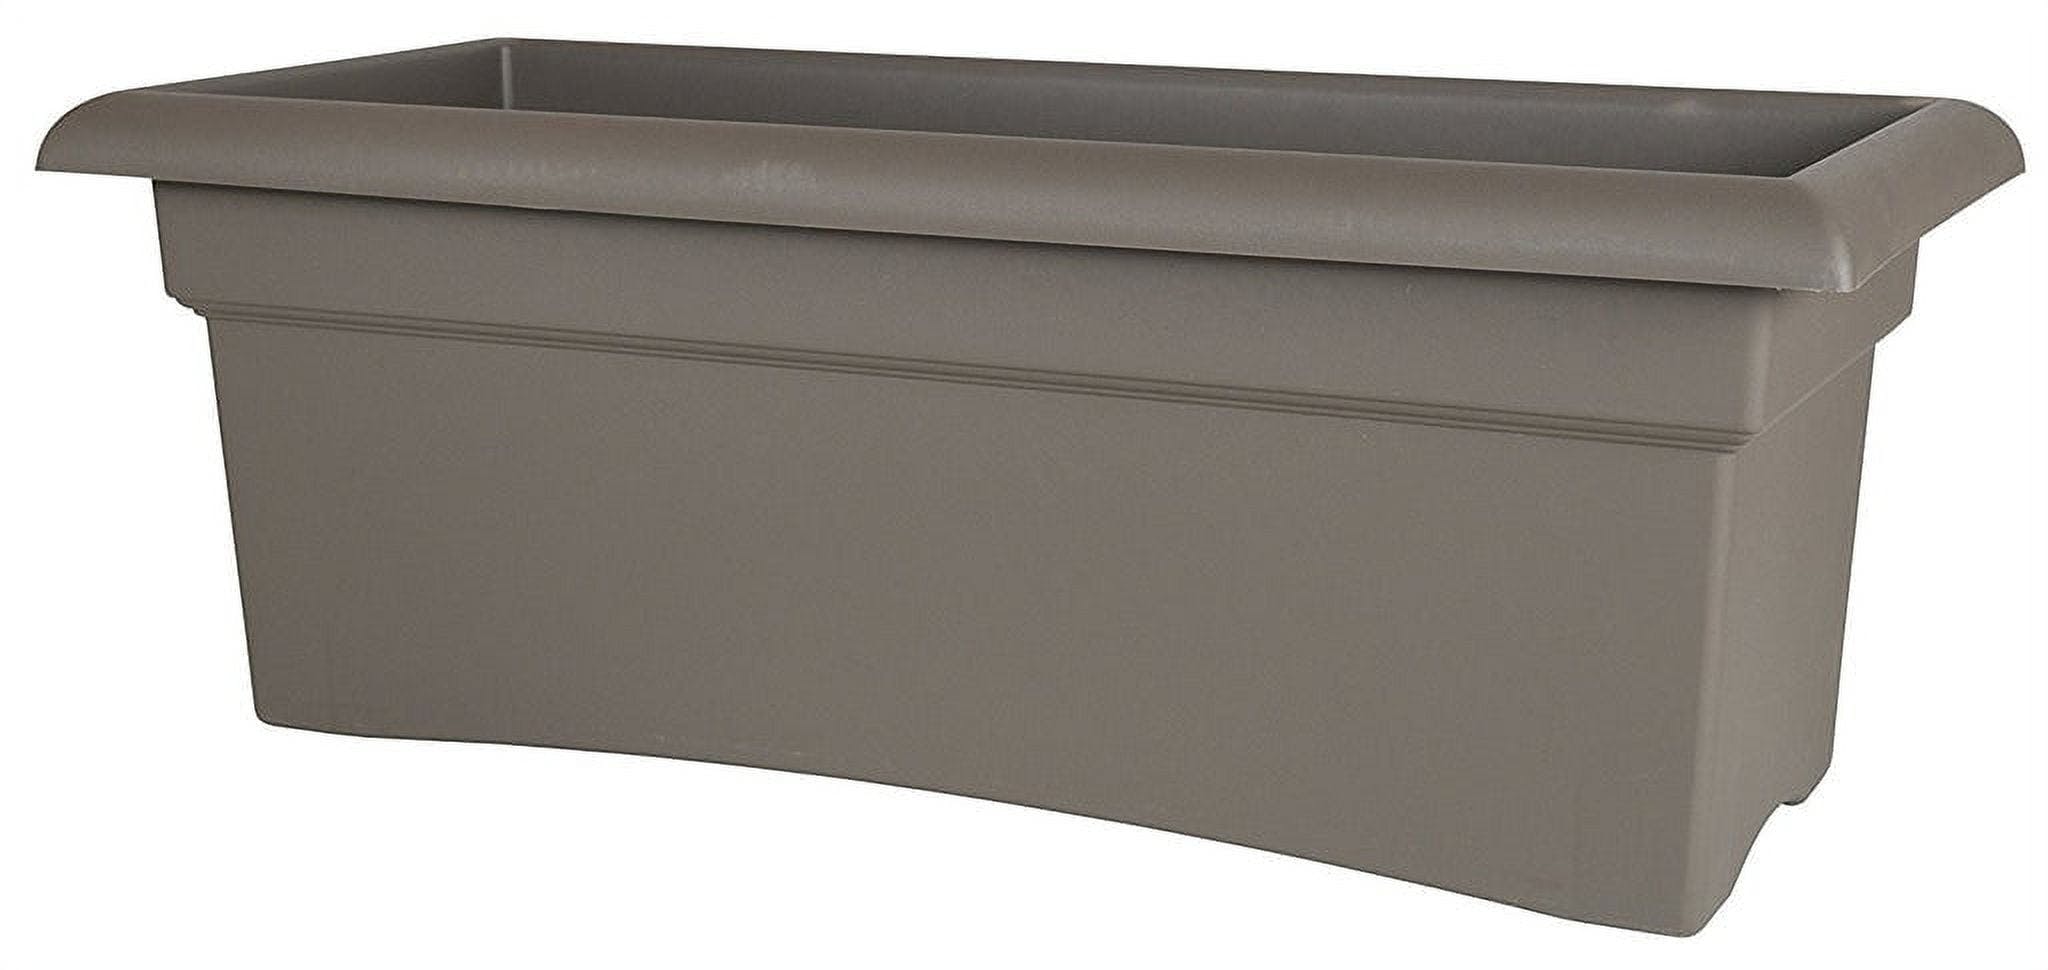 Charcoal Gray 26-inch Wide Resin Veranda Deck Box Planter